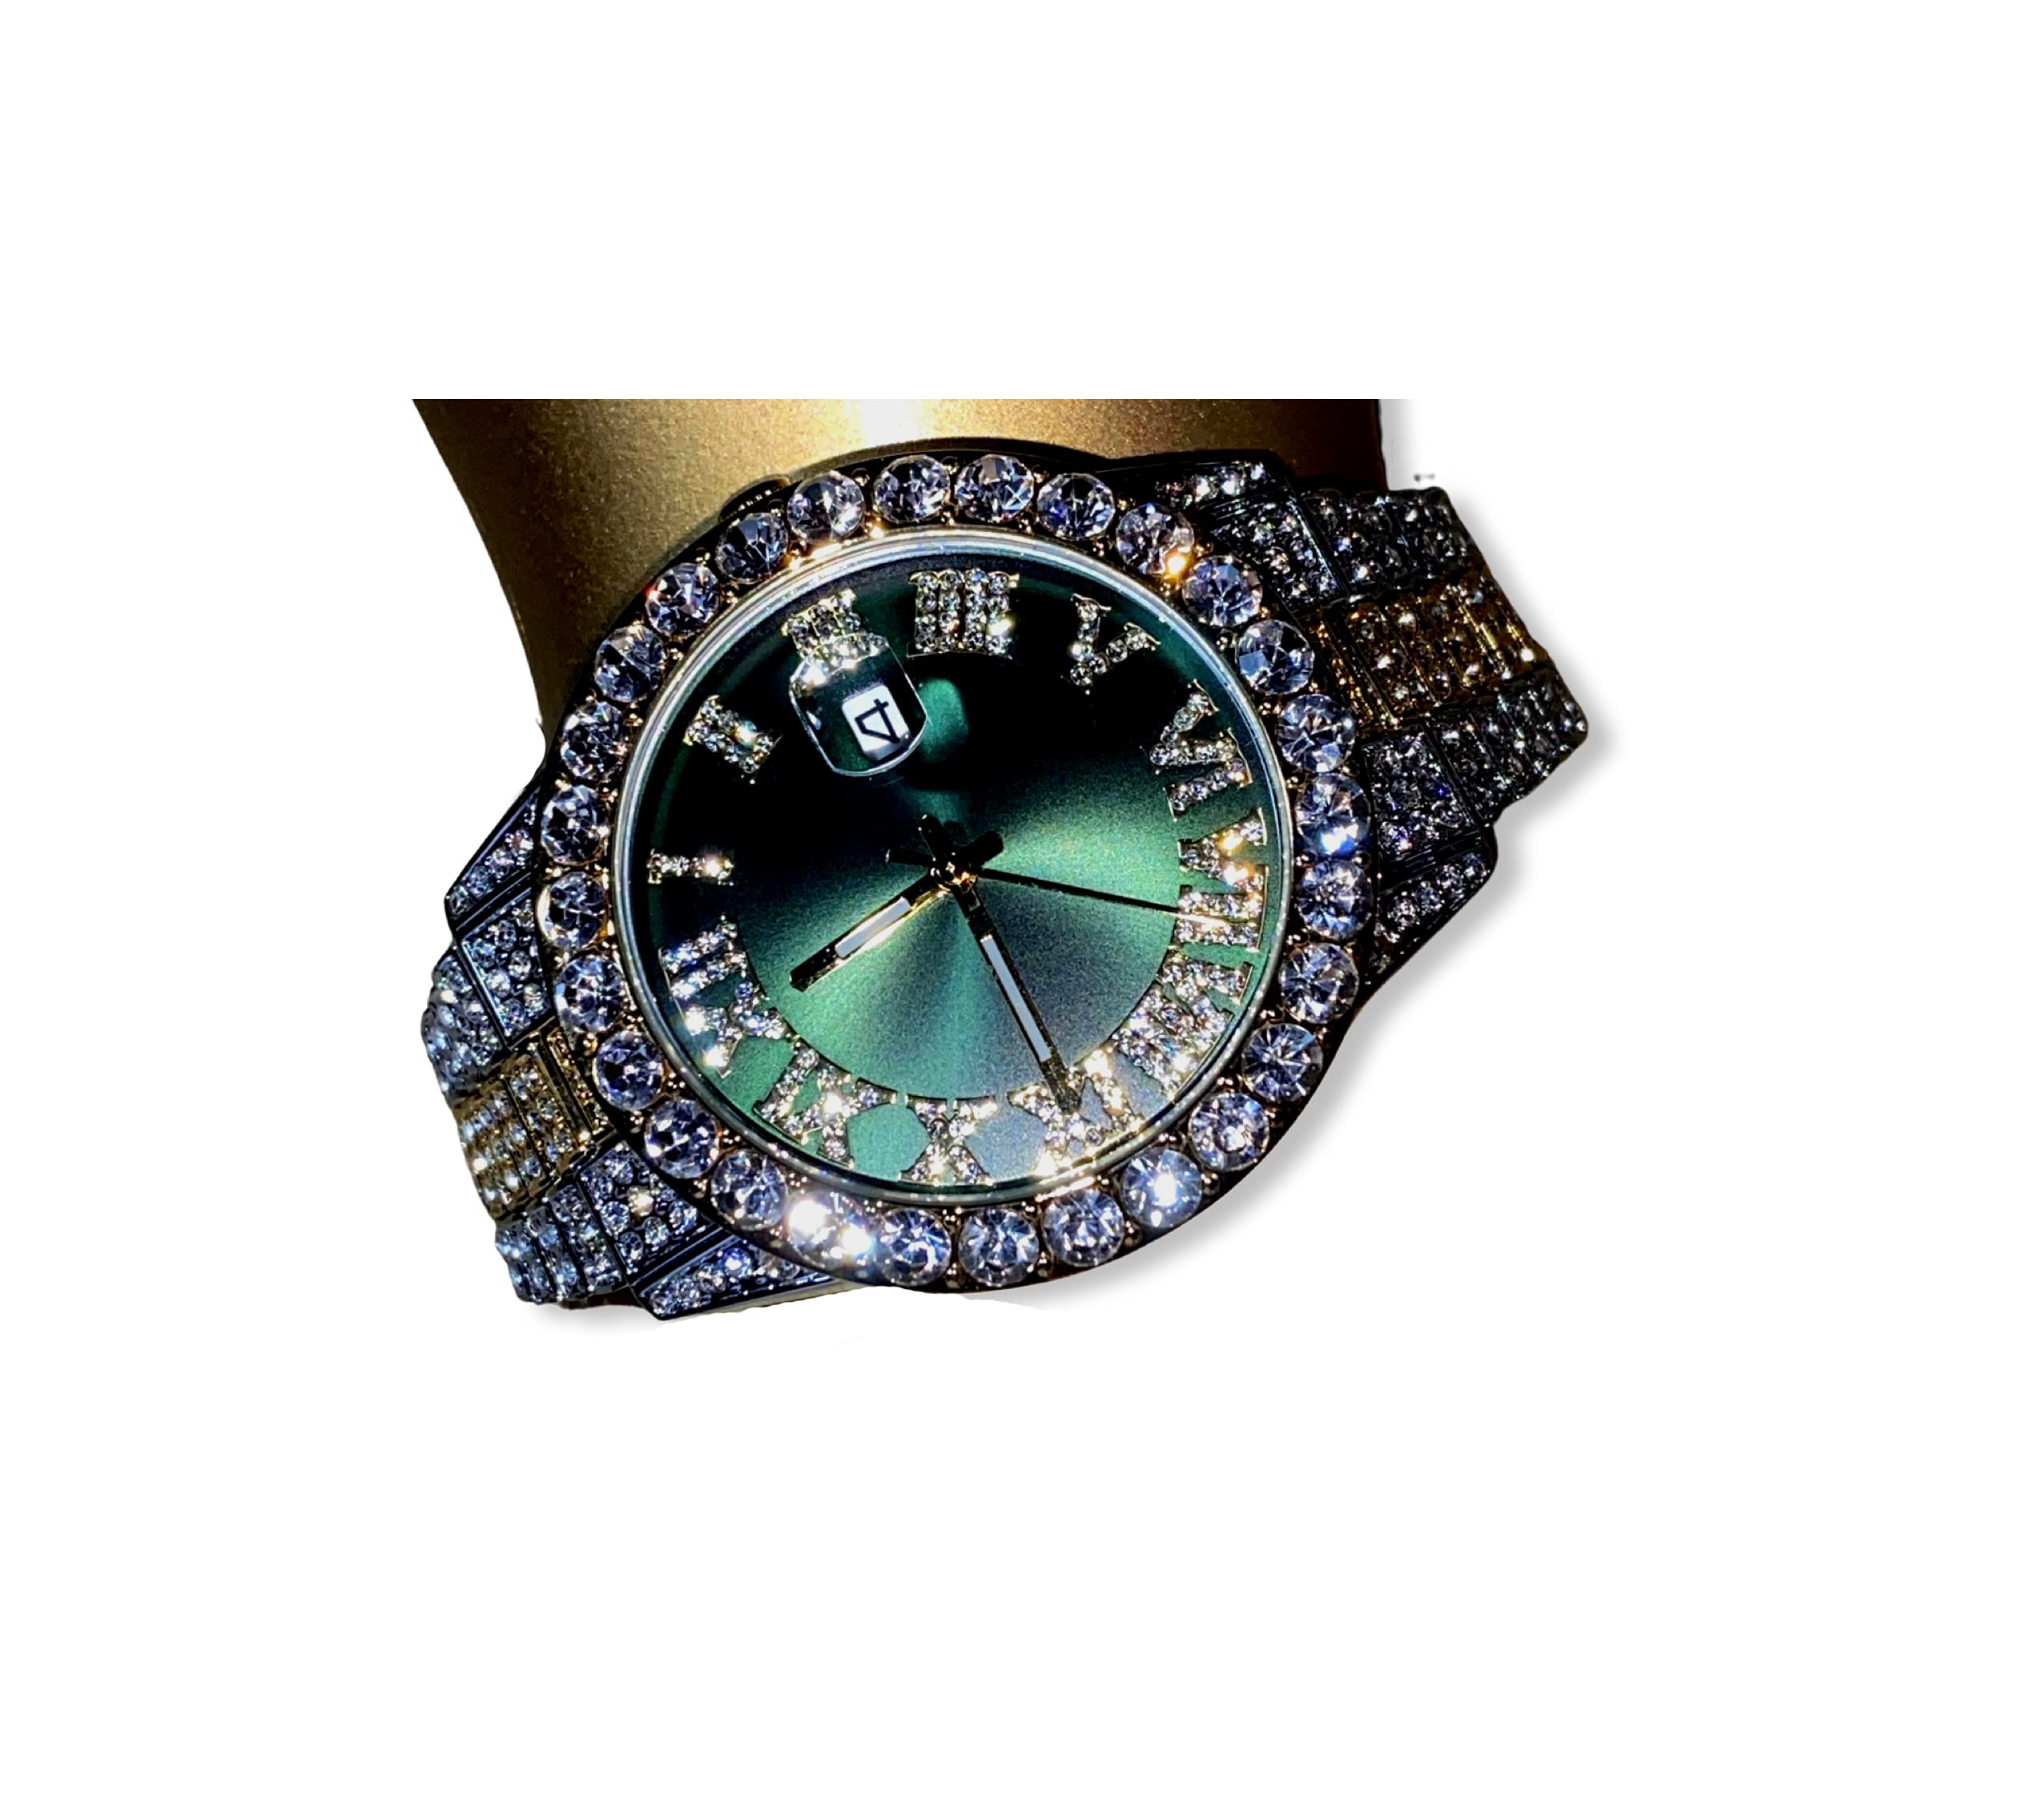 Men's Round 2 tone Green Dial Wrist Watch Band Luxury CZ Diamond Iced Bracelet Roman Numeric Round Dial Watch For Men Women Hip Hop Rapper Choice, Jewelry Watch, Iced Watch Custom Fit, Bust Down Watch